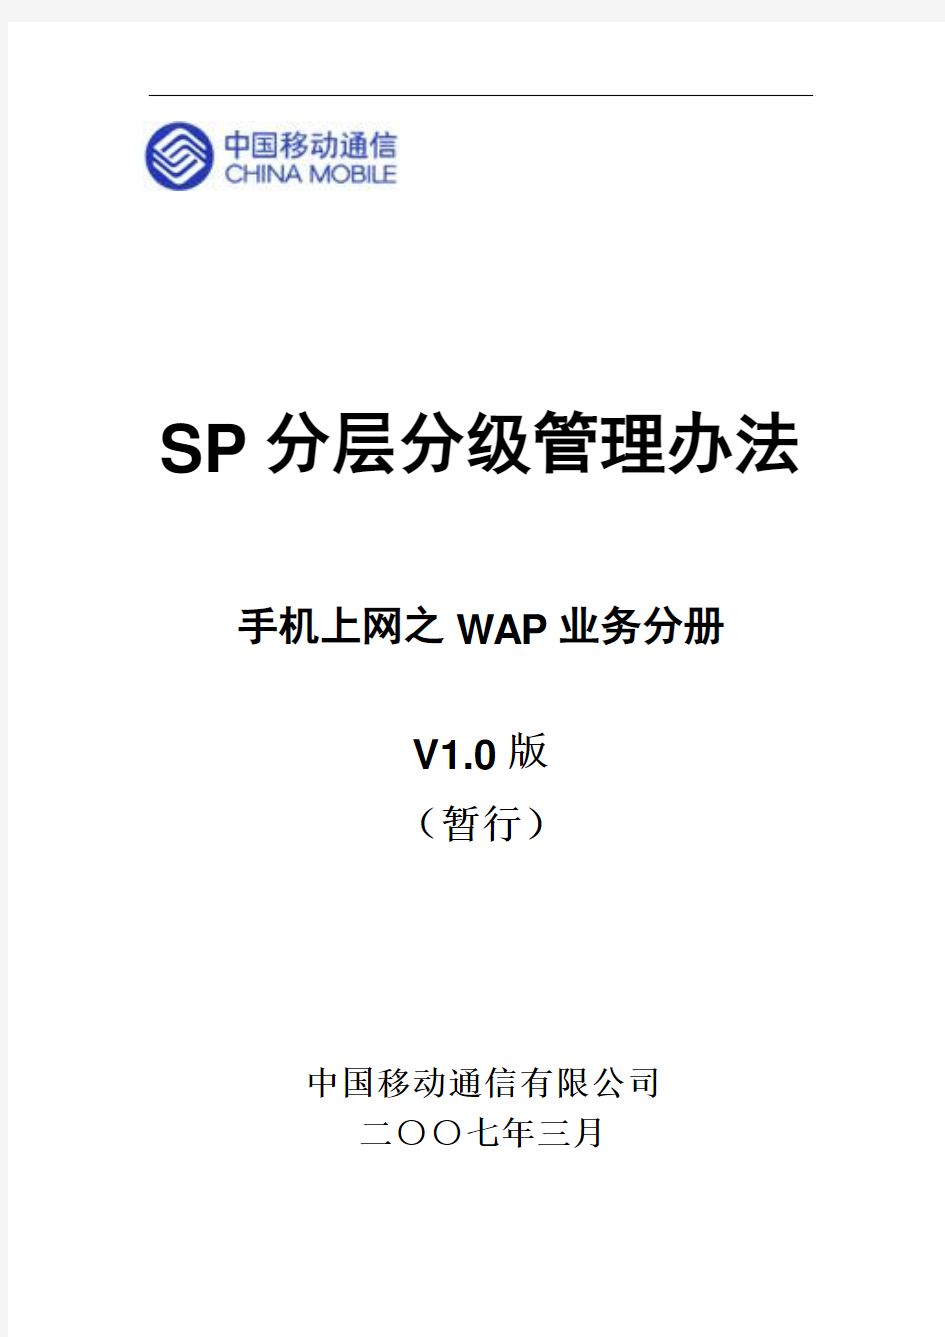 SP分层分级管理办法(WAP)